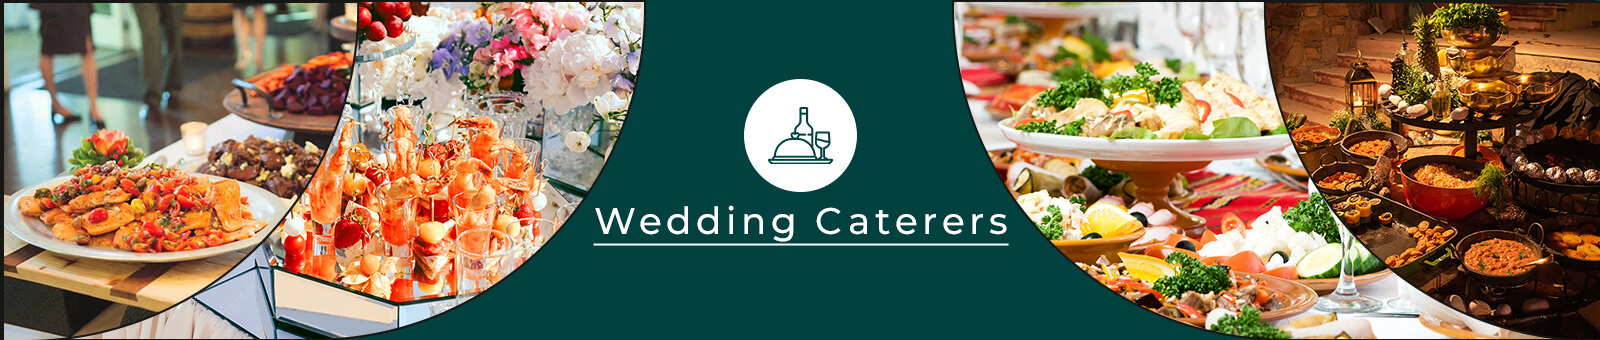 Best Wedding Caterers in Chandigarh